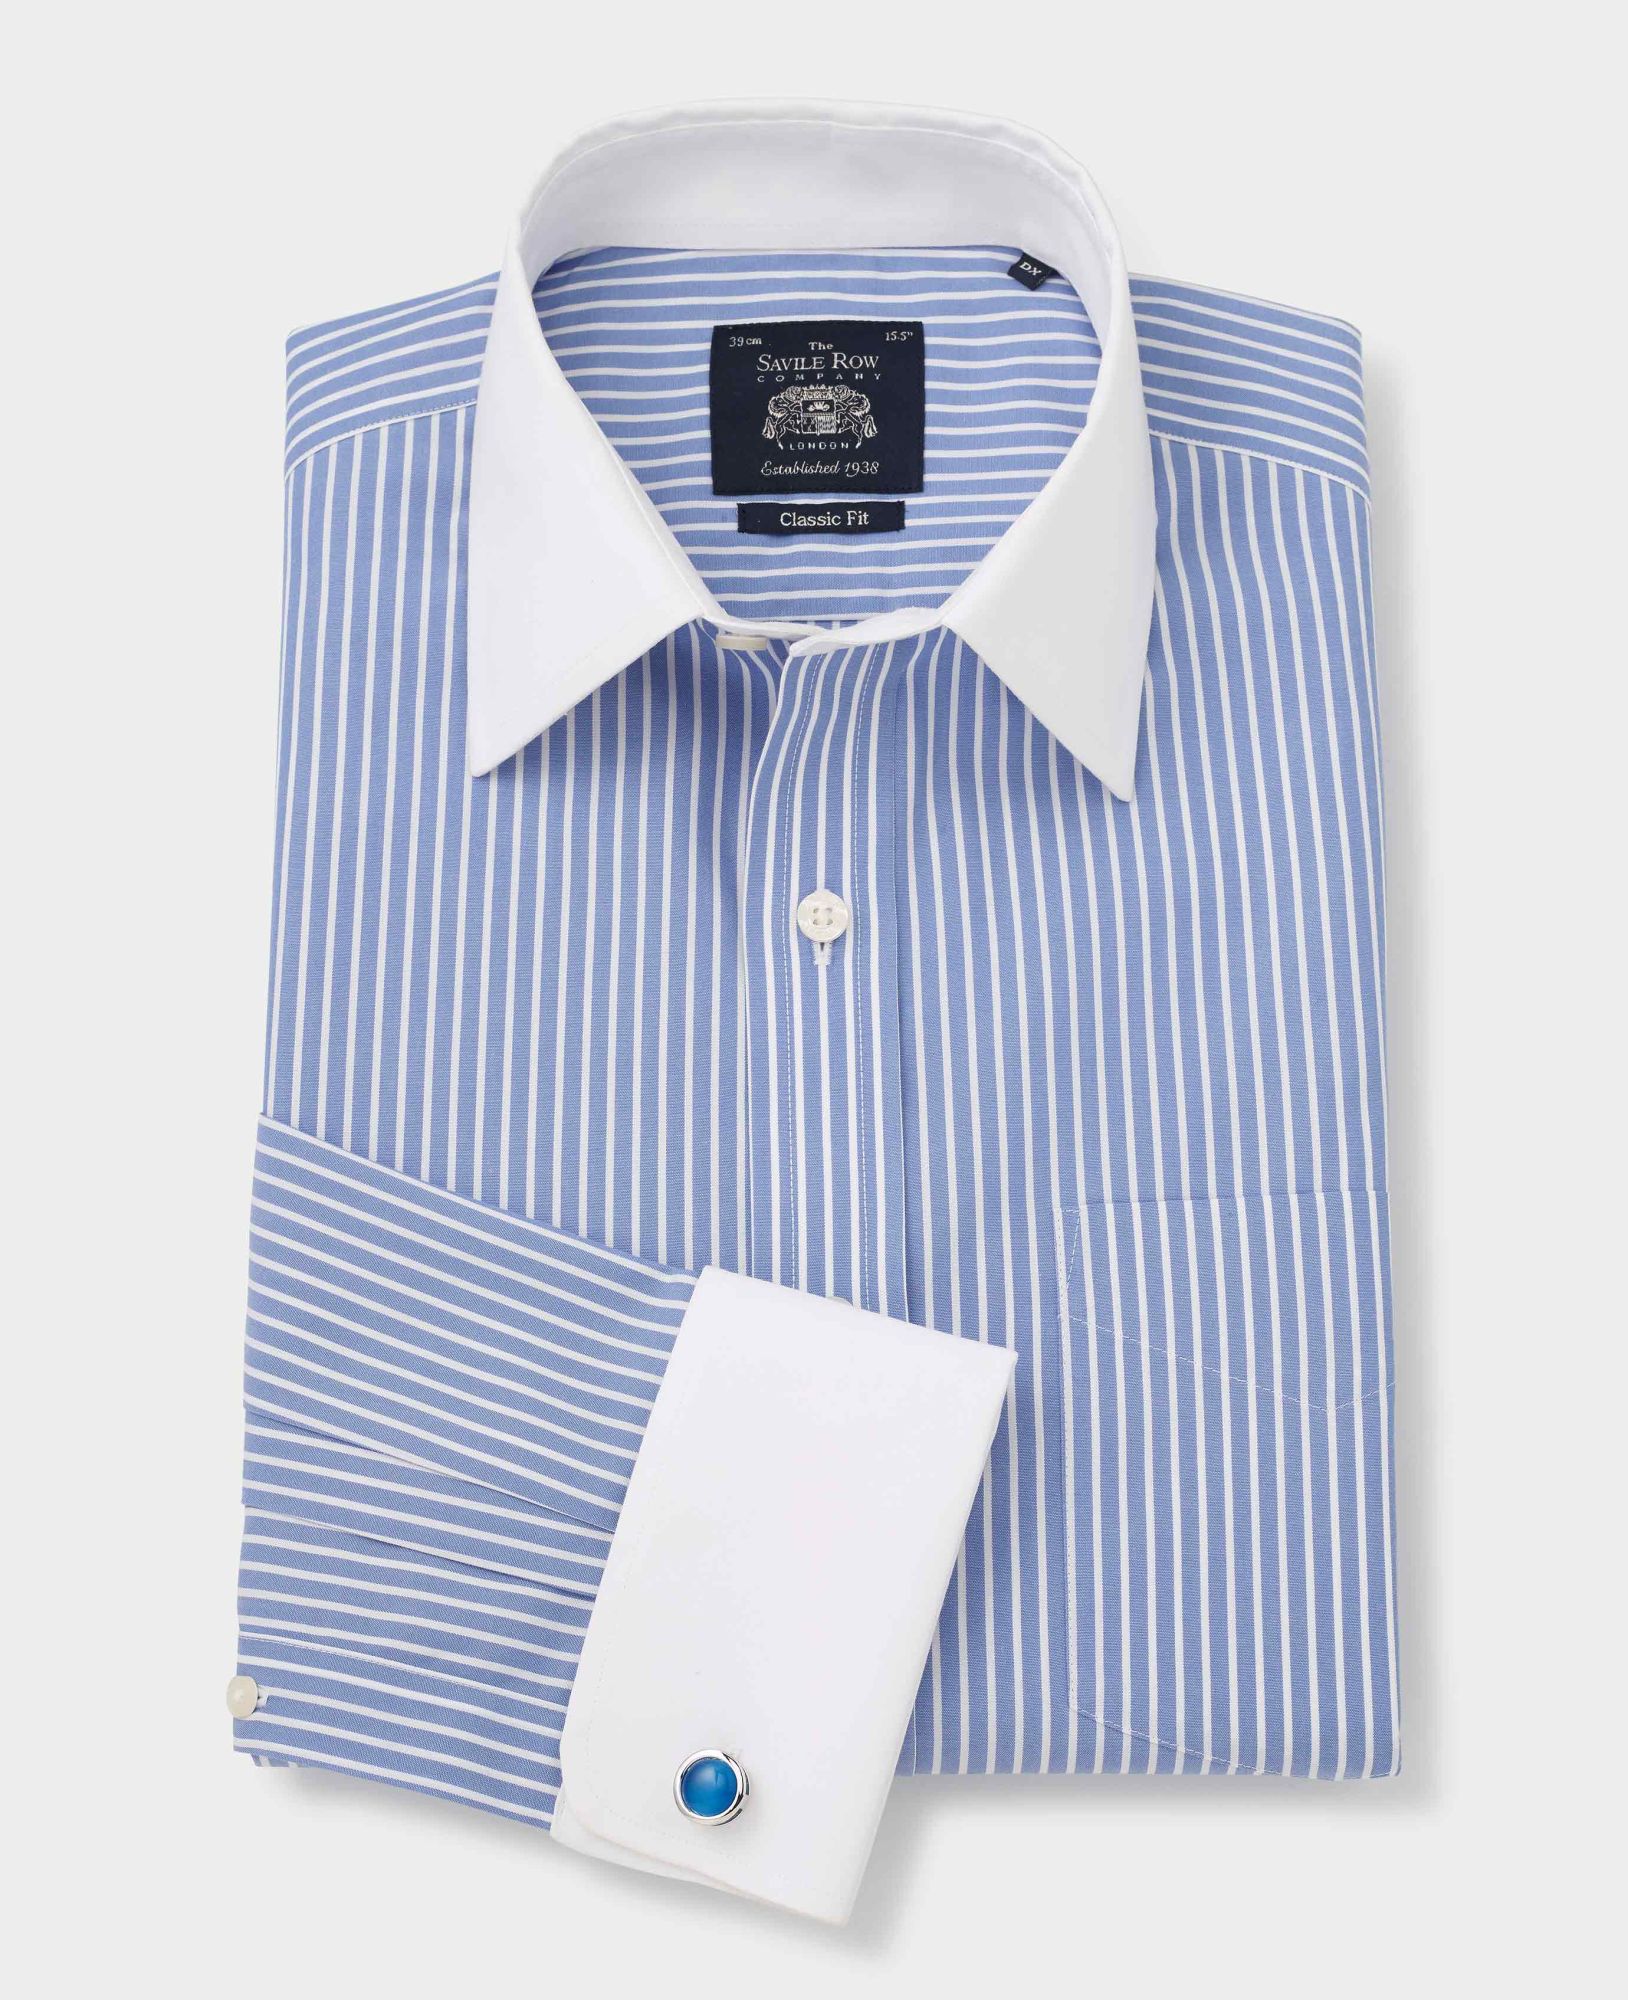 Blue White Stripe Classic Fit Non-Iron Shirt With White Collar & Cuffs - Double Cuff 19